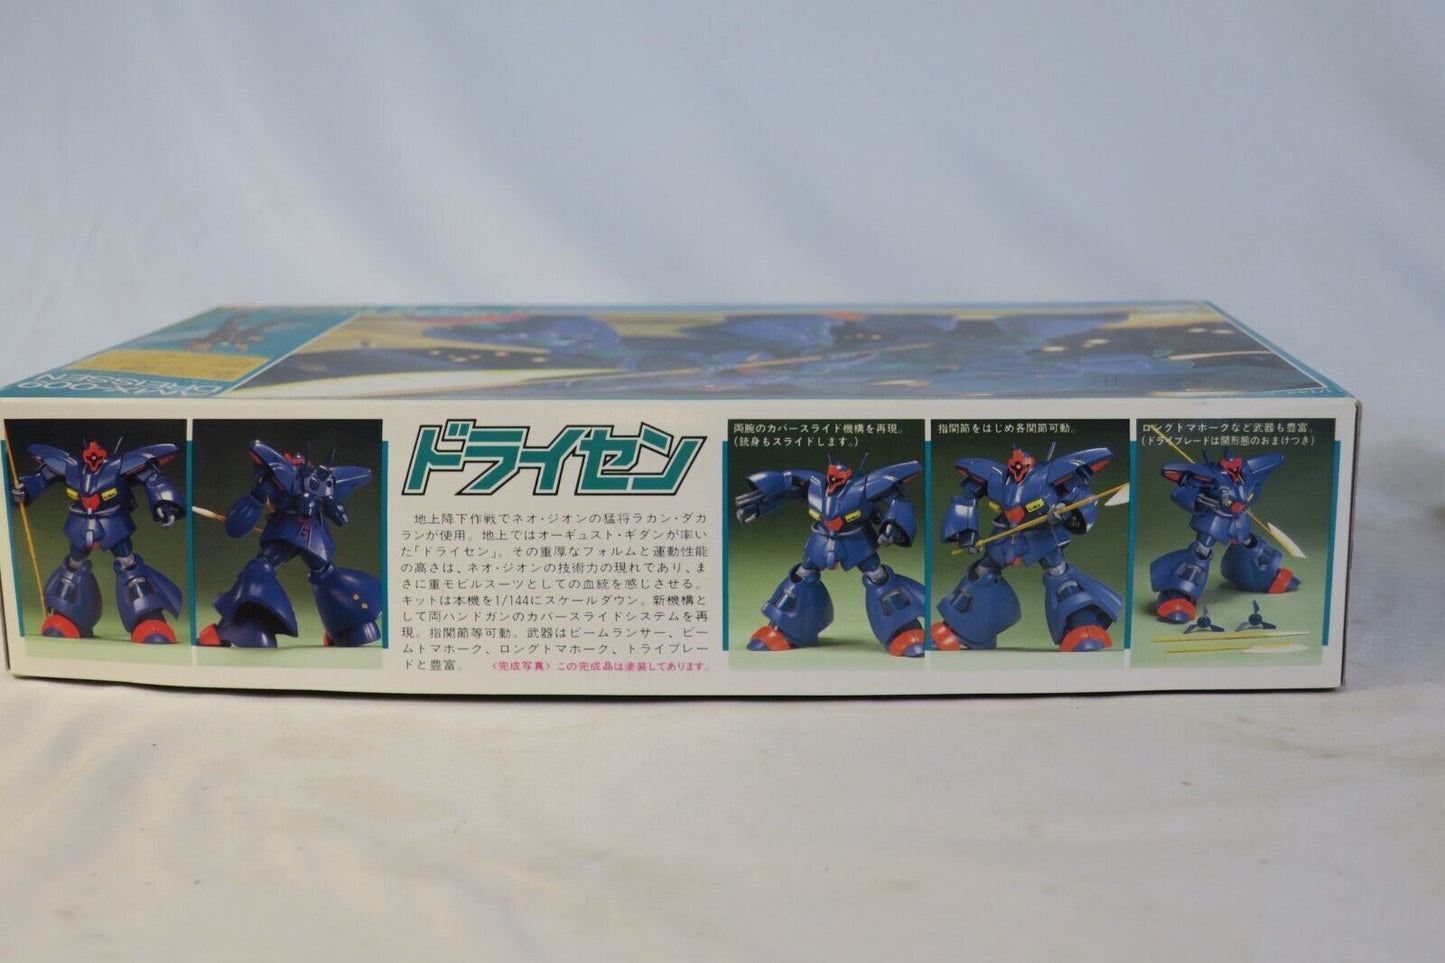 Bandai ZZ Gundam #16 Dreissen AMX-009 1/144 Model Kit 0007128 C9